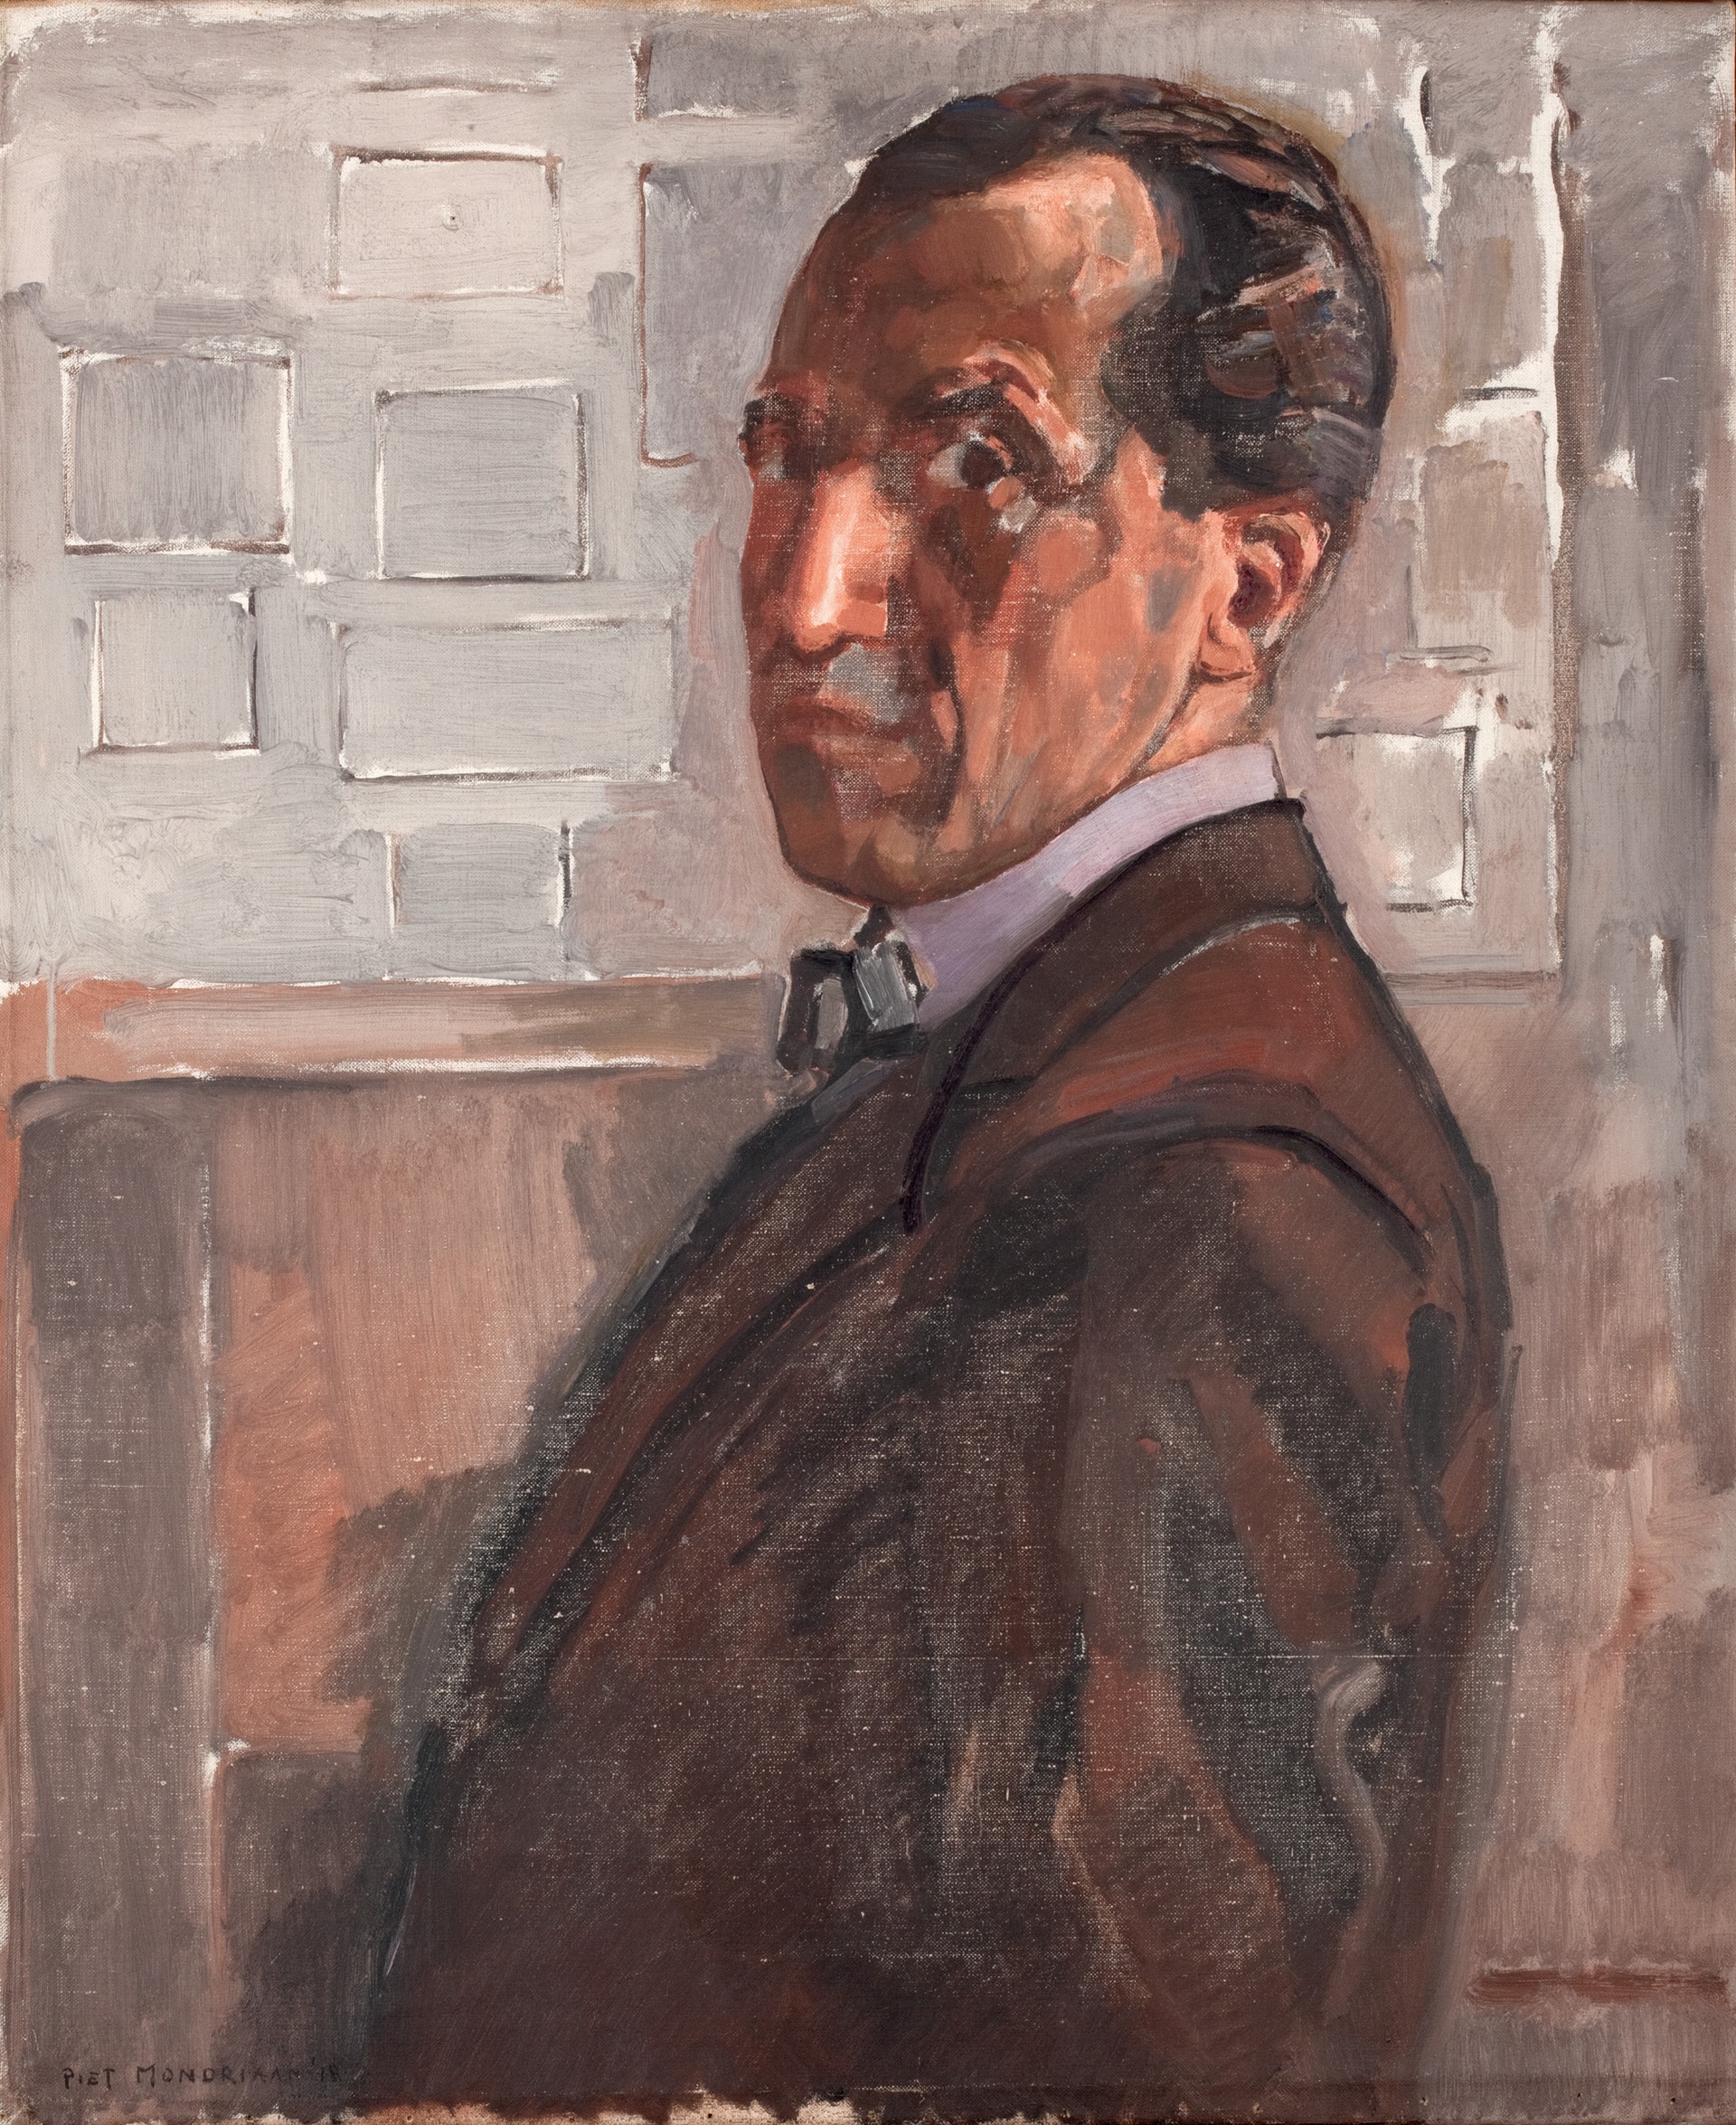 Piet Mondrian (1872-1944): Autoritratto, 1918. Olio su tela. Kunstmuseum Den Haag